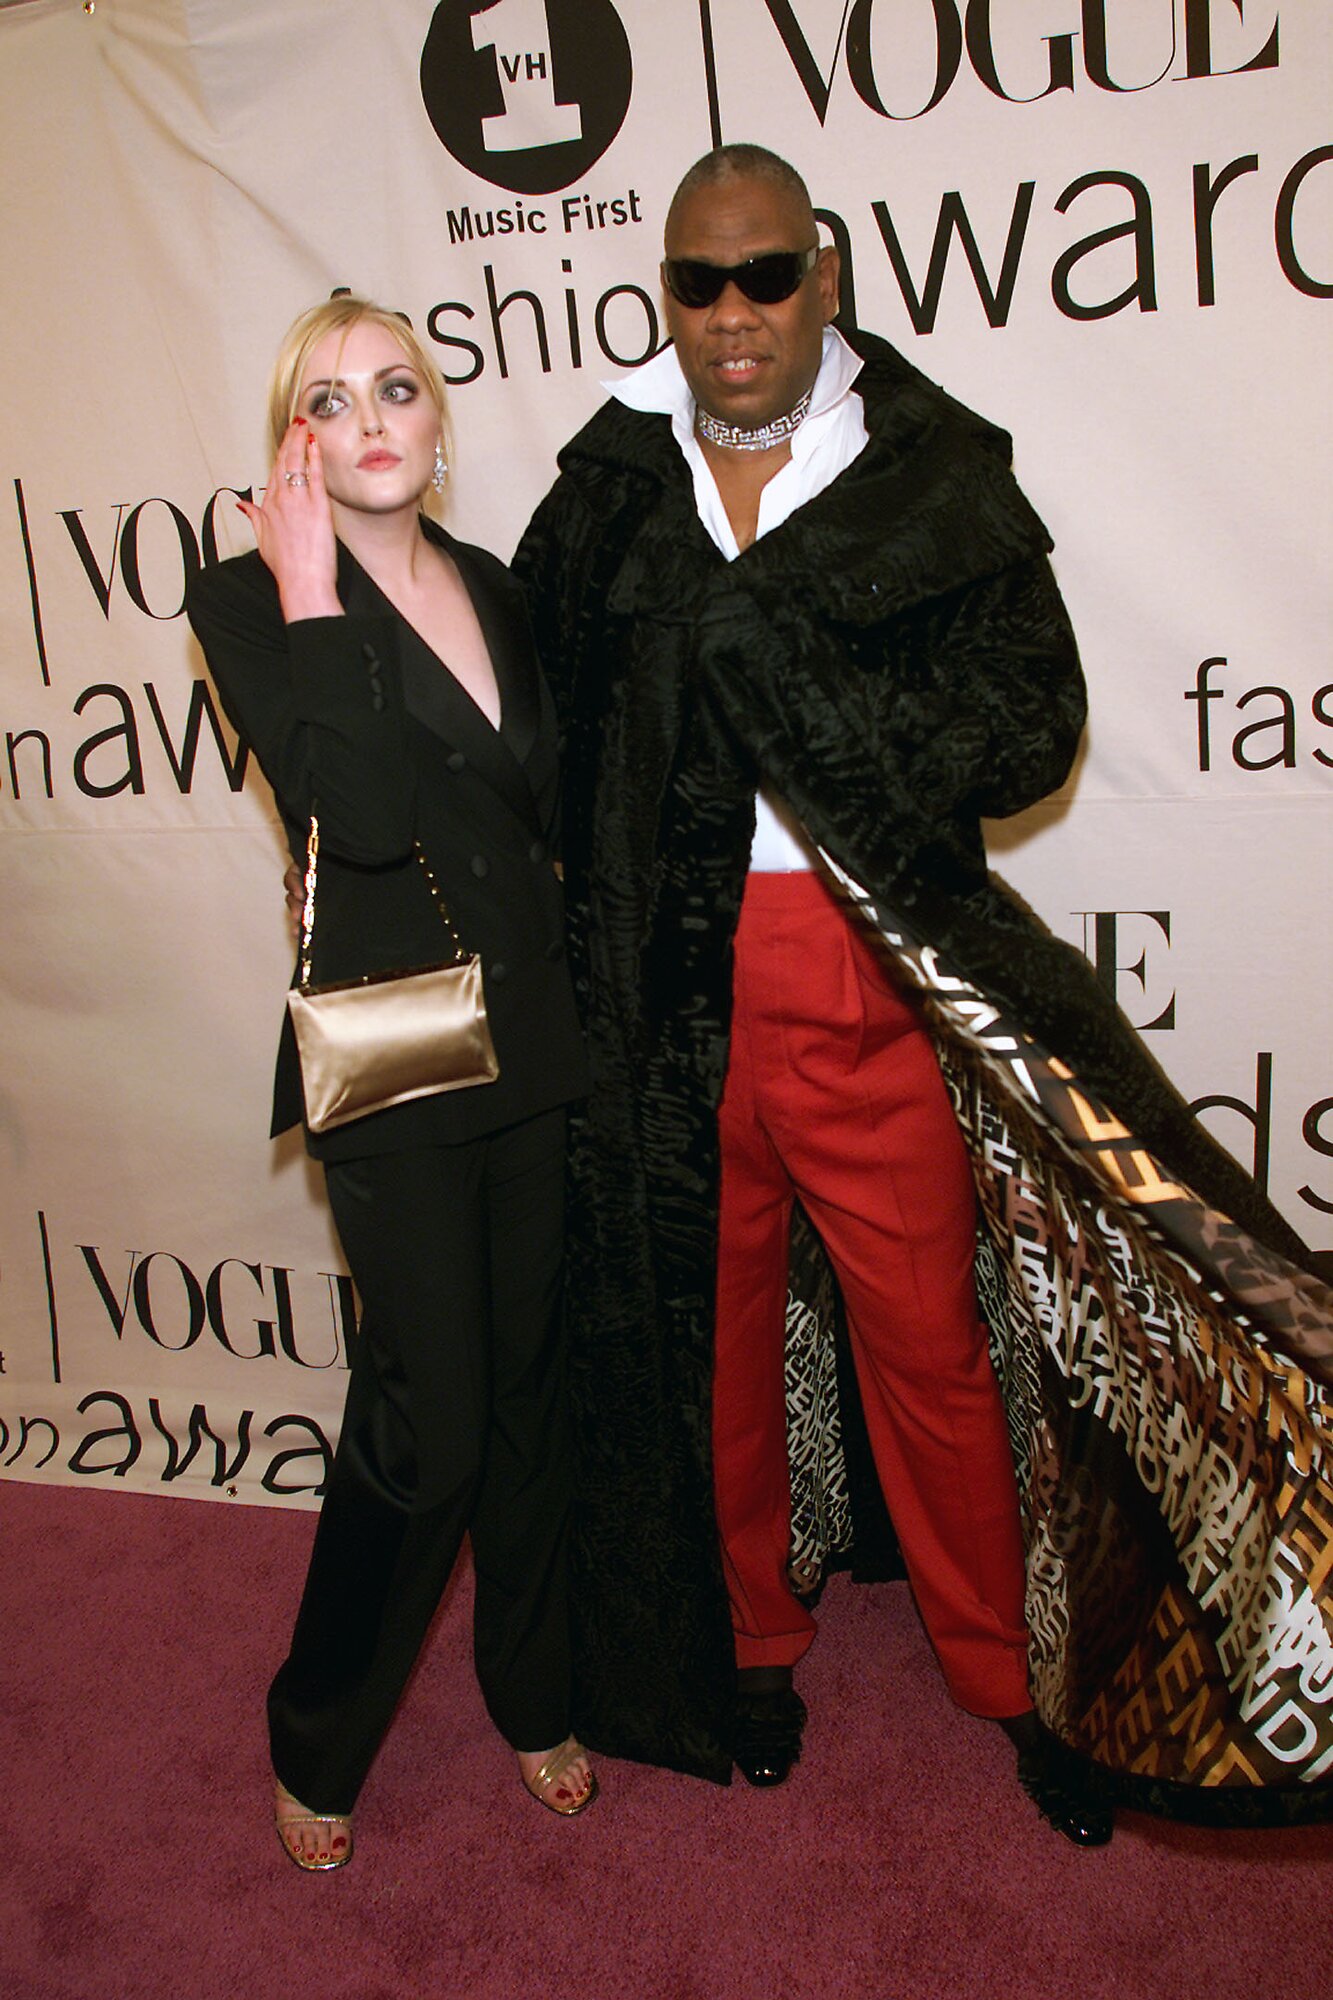 Sophie Dahl és Andre Leon Talley a 2000-es VH?1 Vogue Fashion Awards díjátadón a New York-i Madison Square Gardenben. 2000.10.20: Evan Agostini/Getty Images
